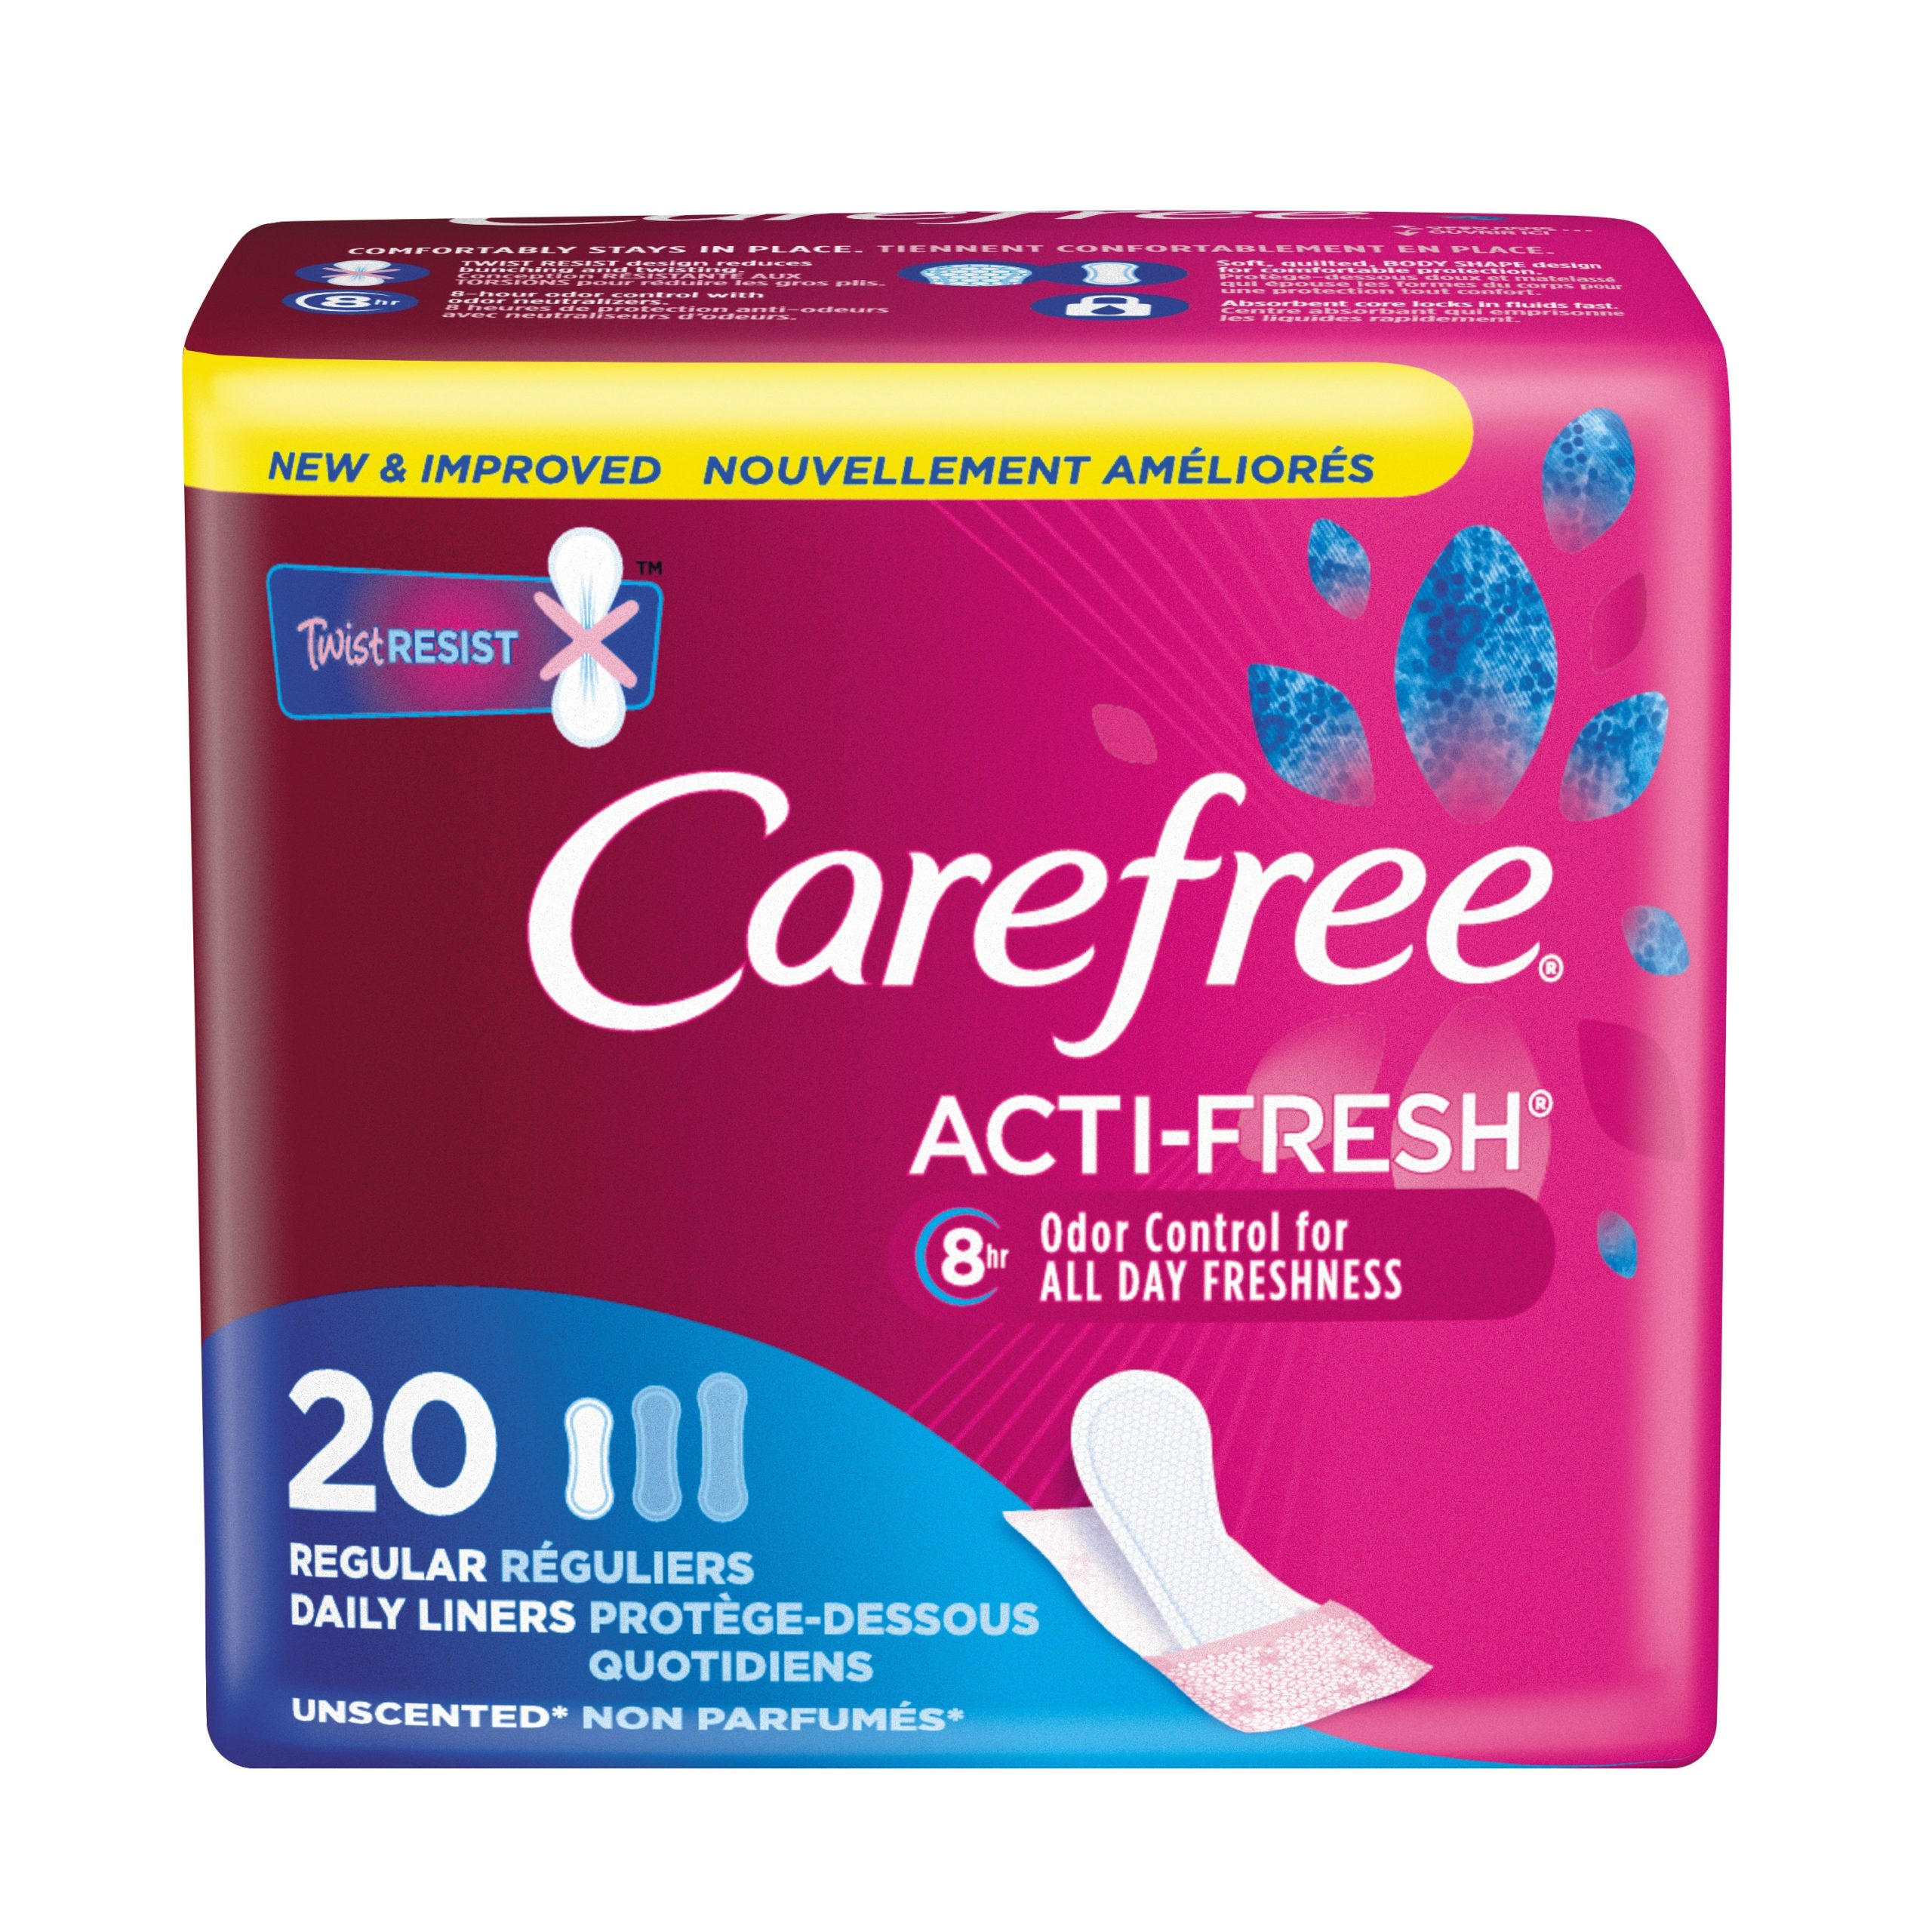 Carefree Acti-Fresh Original Regular 20X (Each)